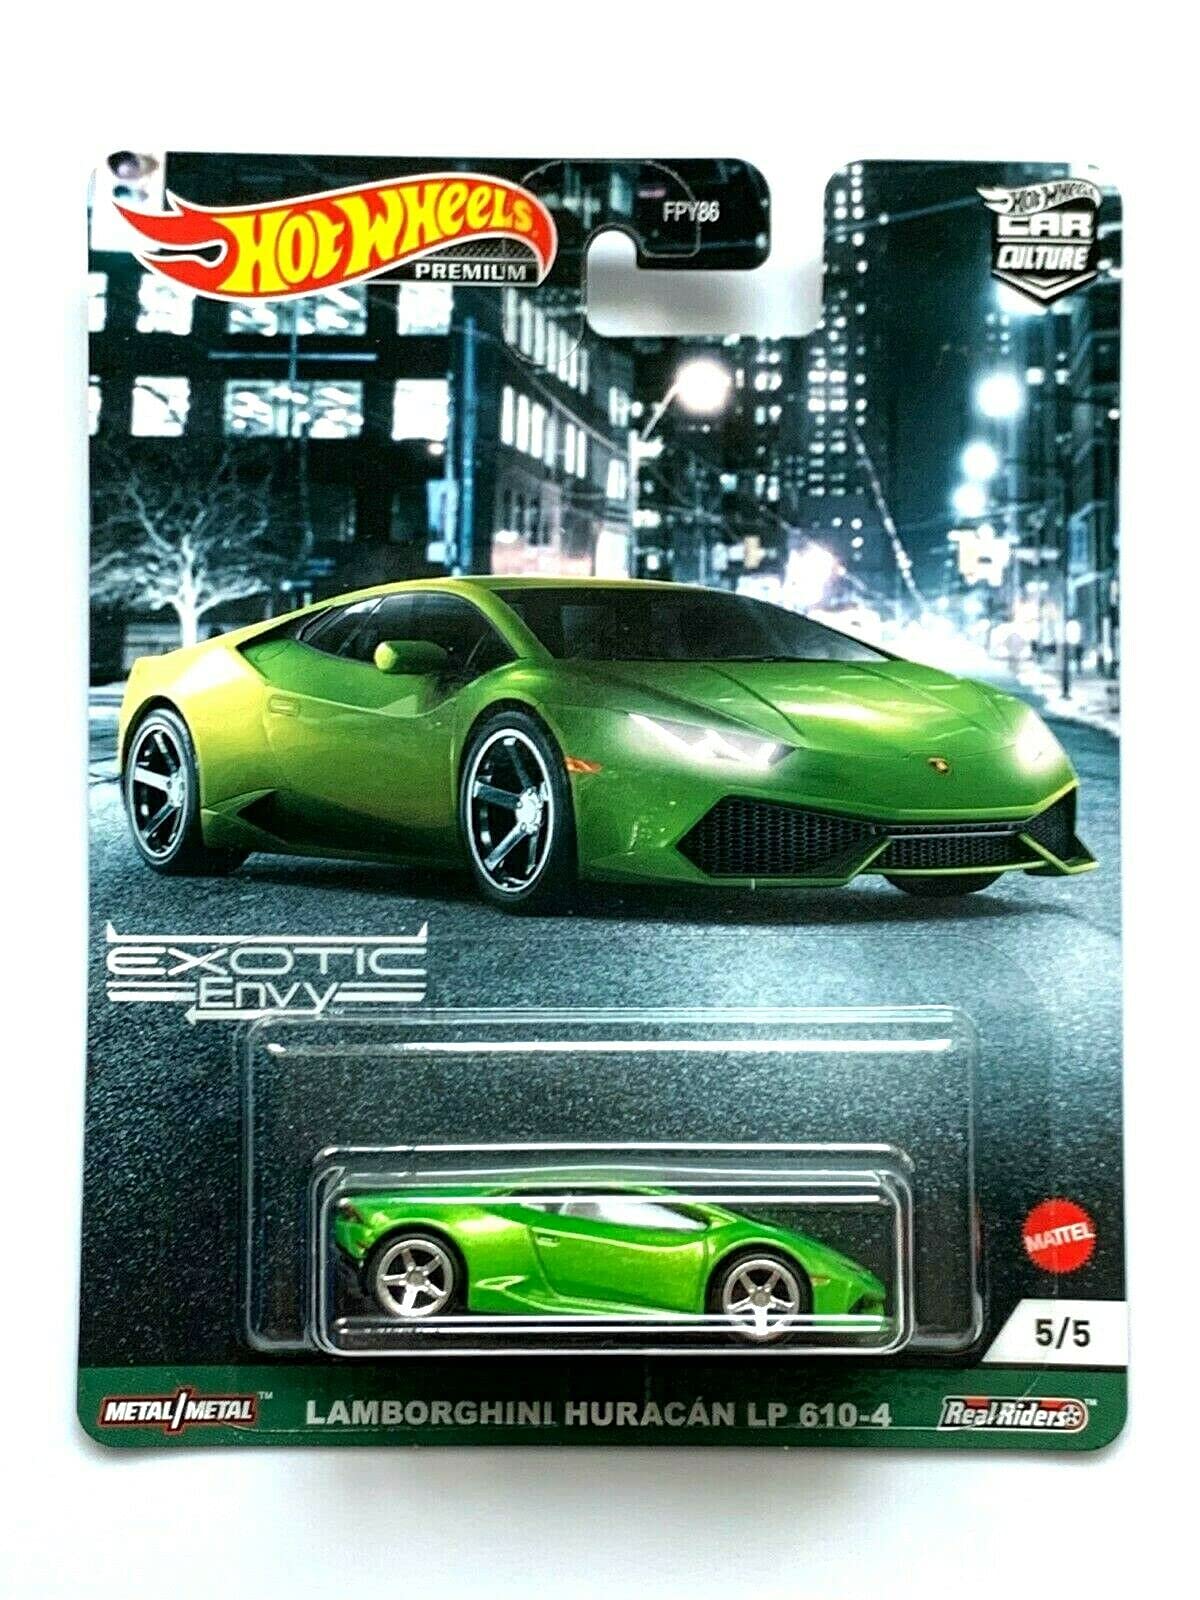 Metal Hotwheels Premium Car Culture Lamborghin Huracan LP 610-4 [Green] - Exotic Envy 5/5 for Unisex Children